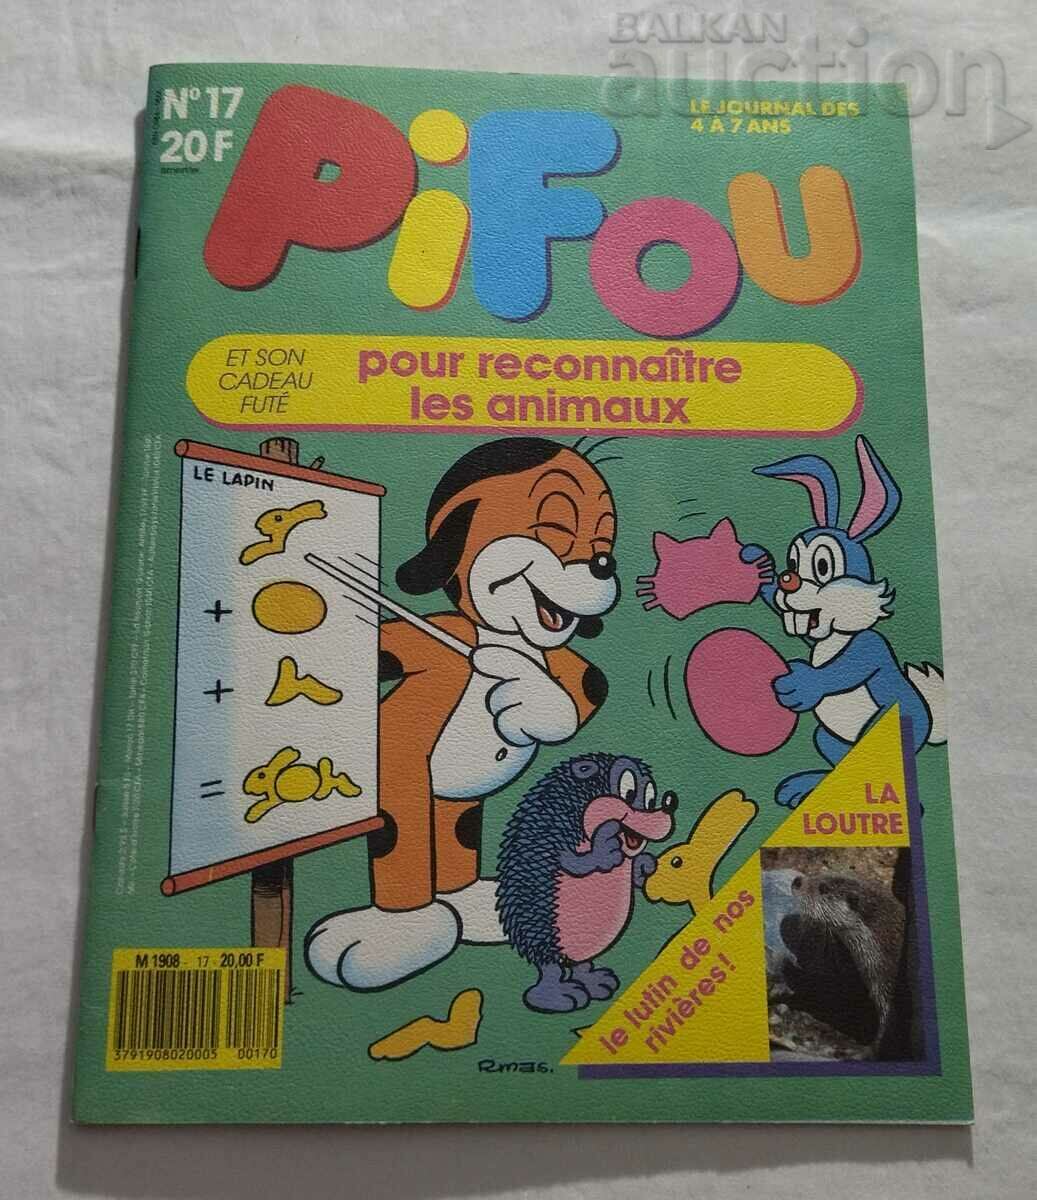 PIFOU No. 17 1989 PIFOU MAGAZINE FOR CHILDREN BETWEEN 4 AND 7 YRS.